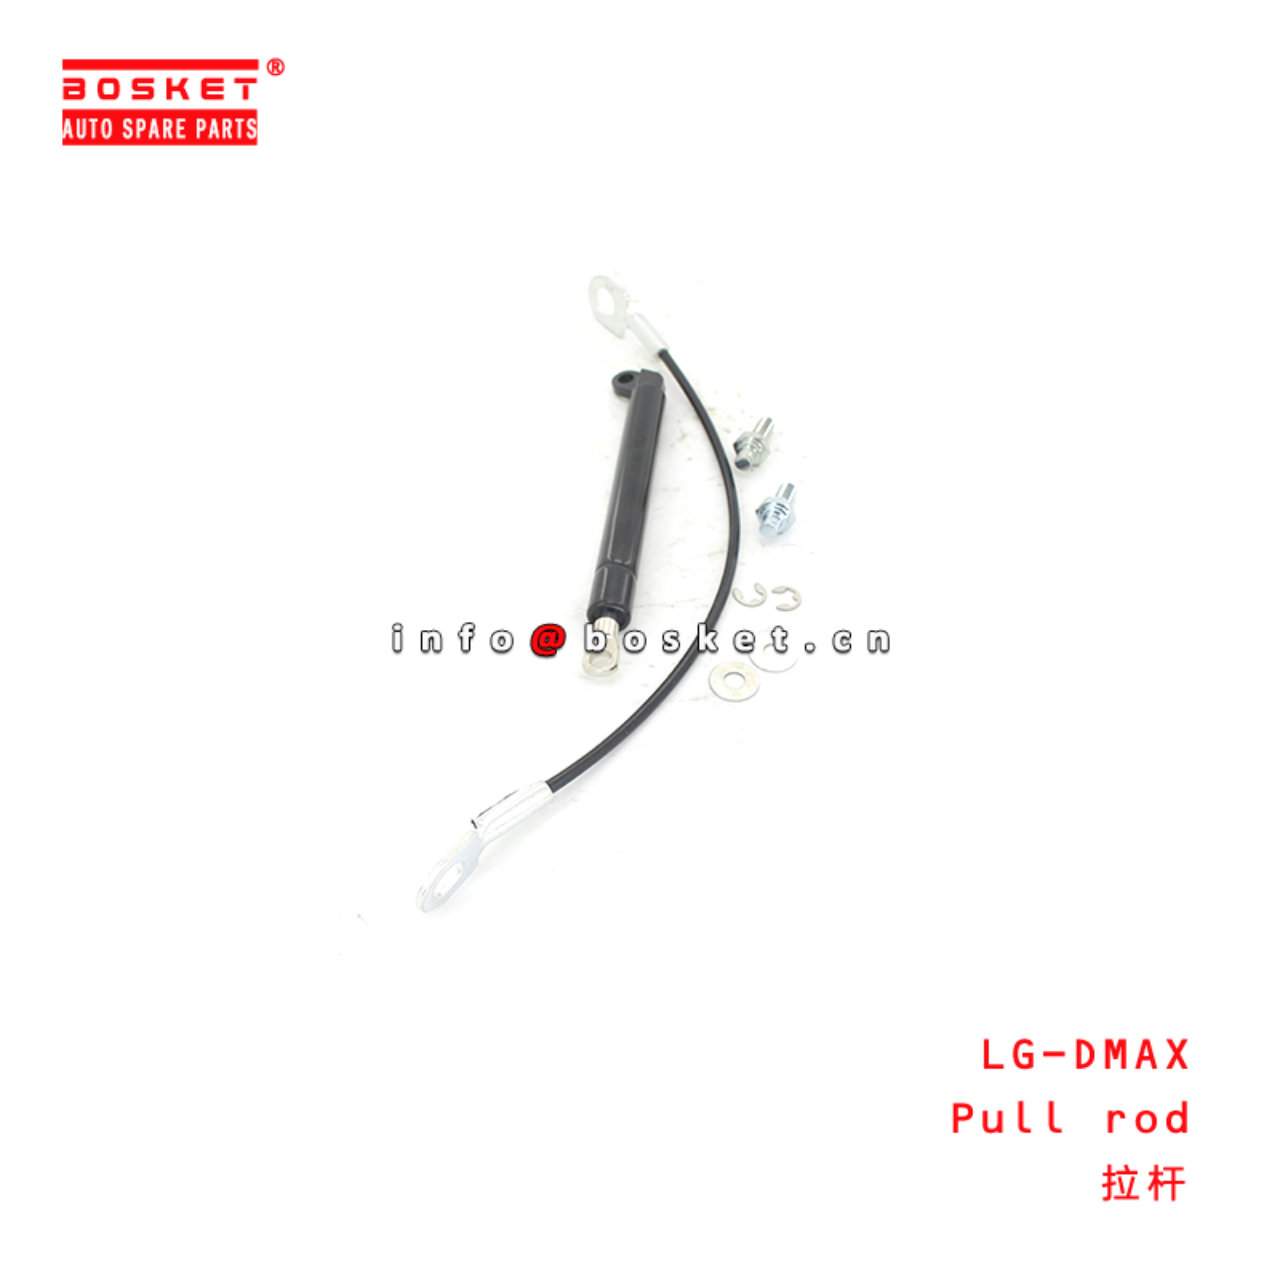 LG-DMAX Pull Rod suitable for ISUZU ISUZU DMAX 2012 LGDMAX